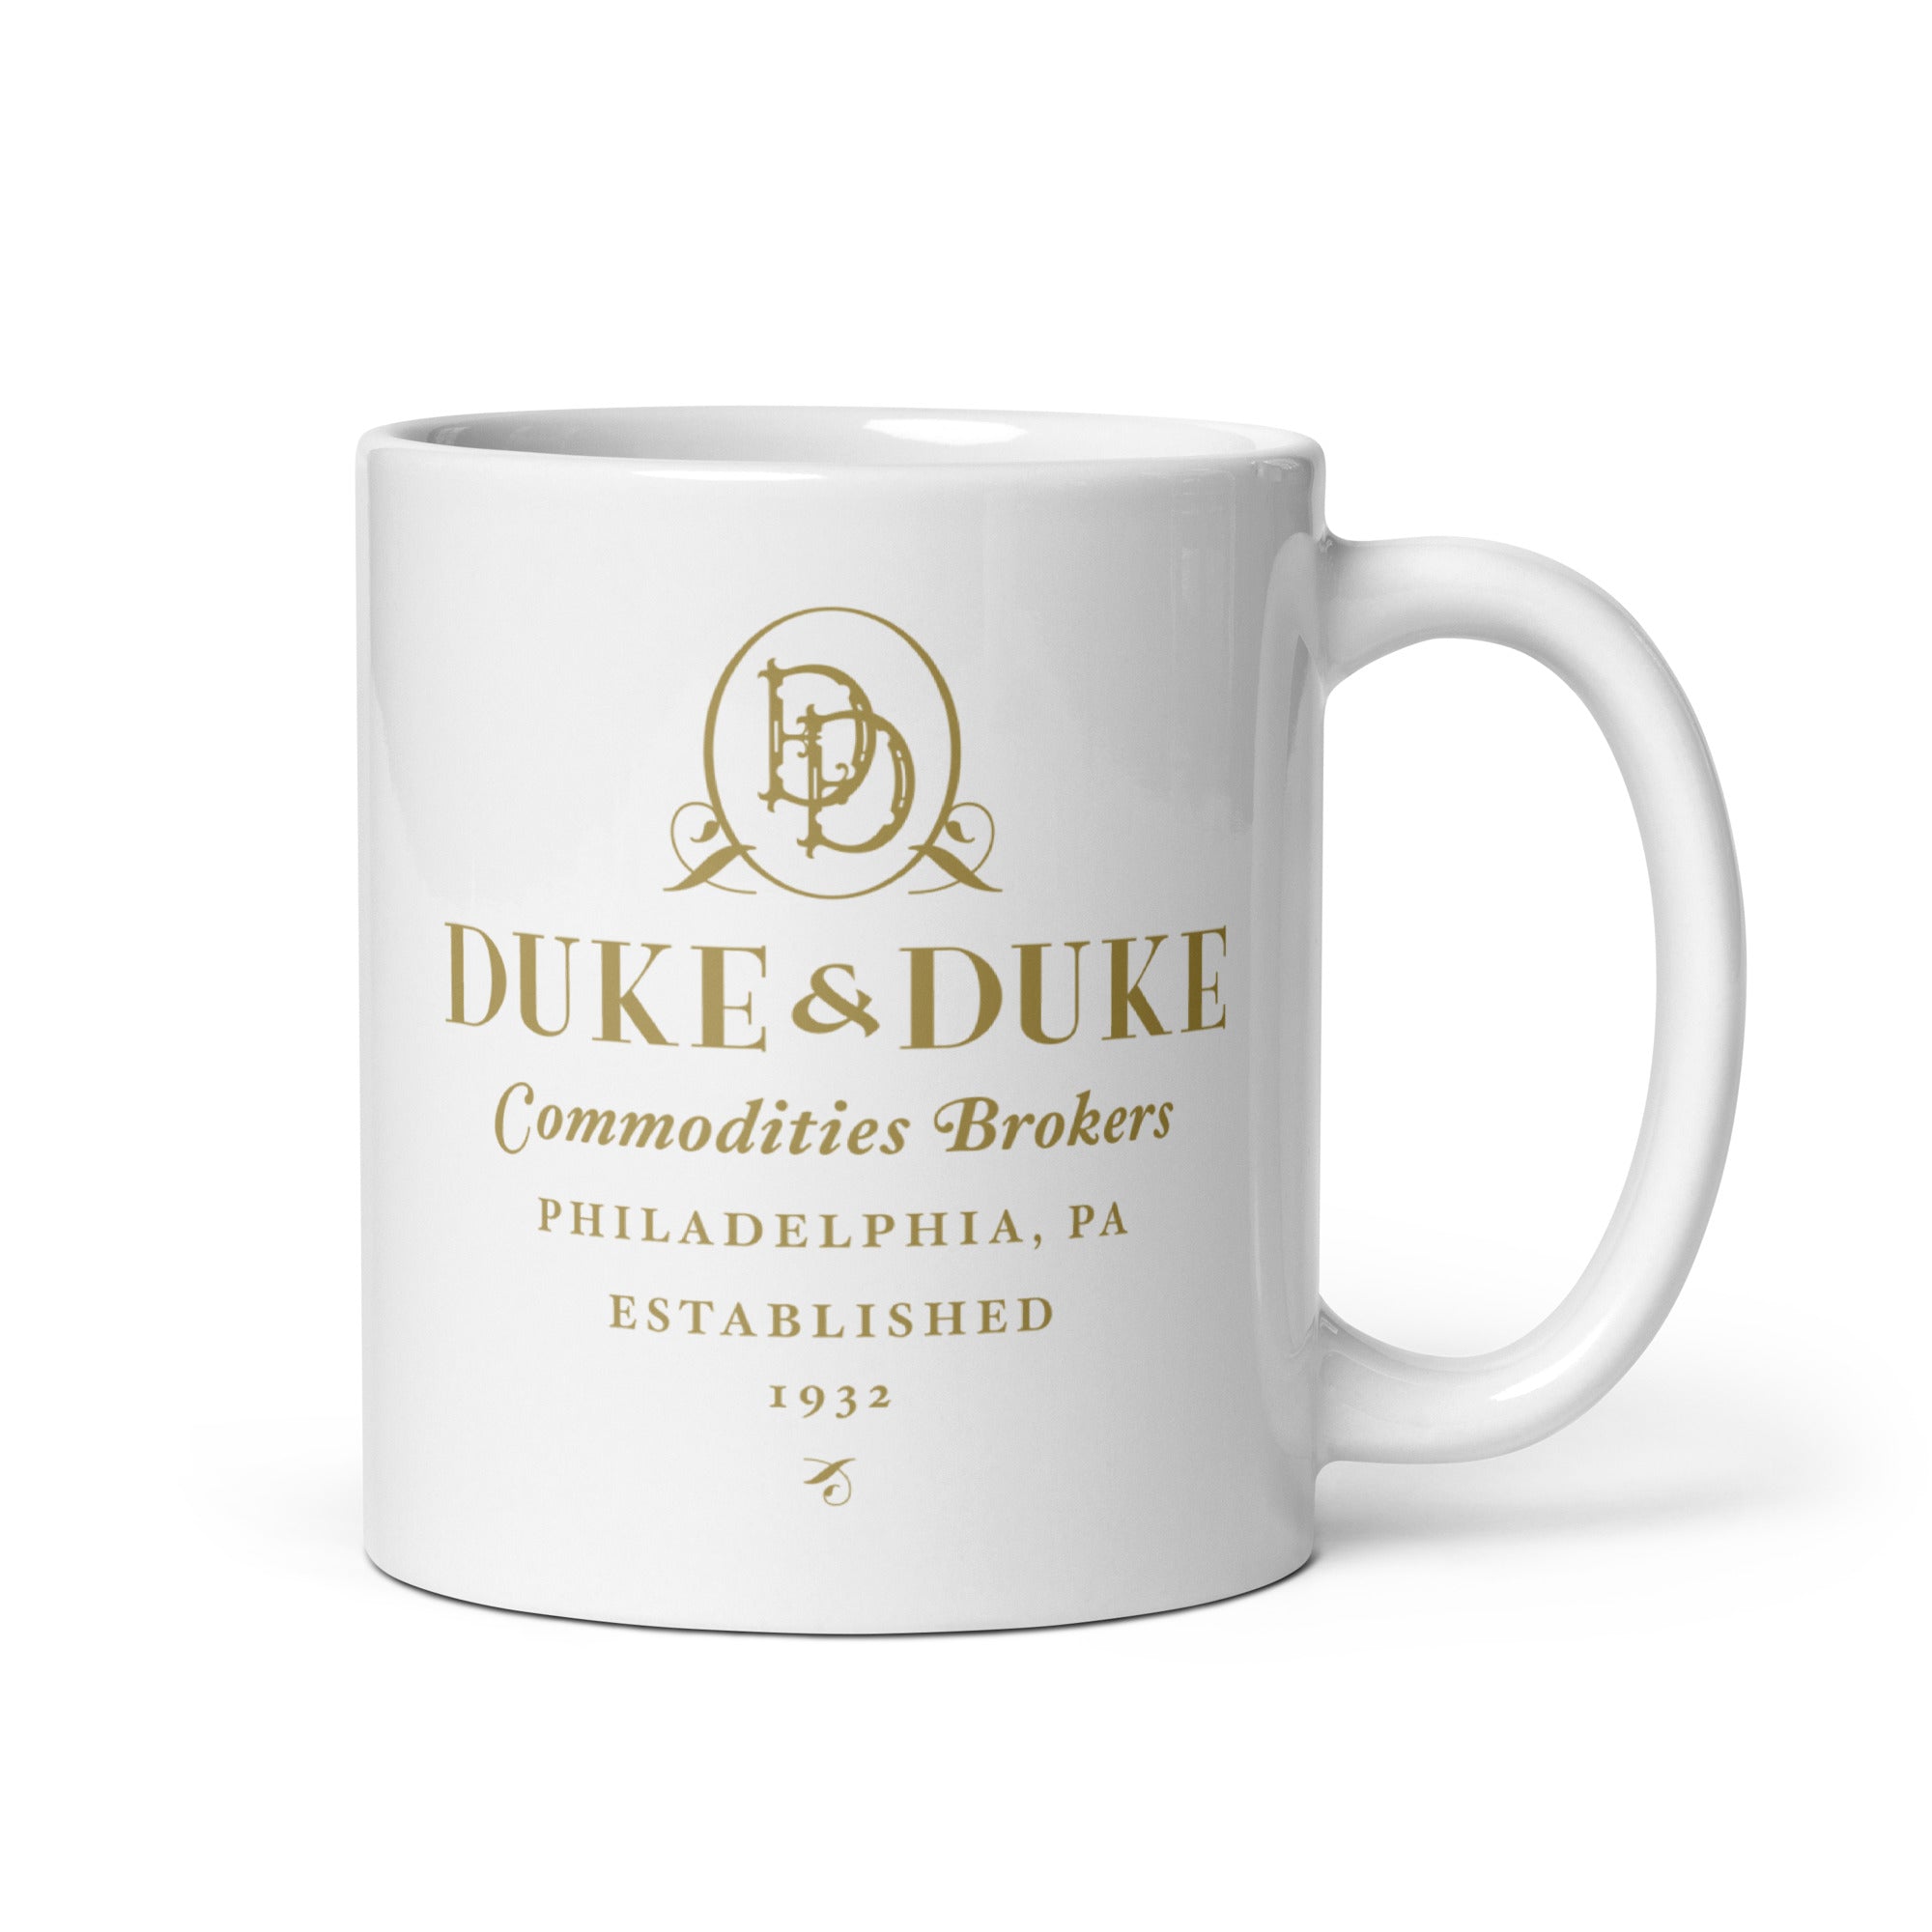 Duke & Duke Commodities Brokers - 11oz Coffee Mug